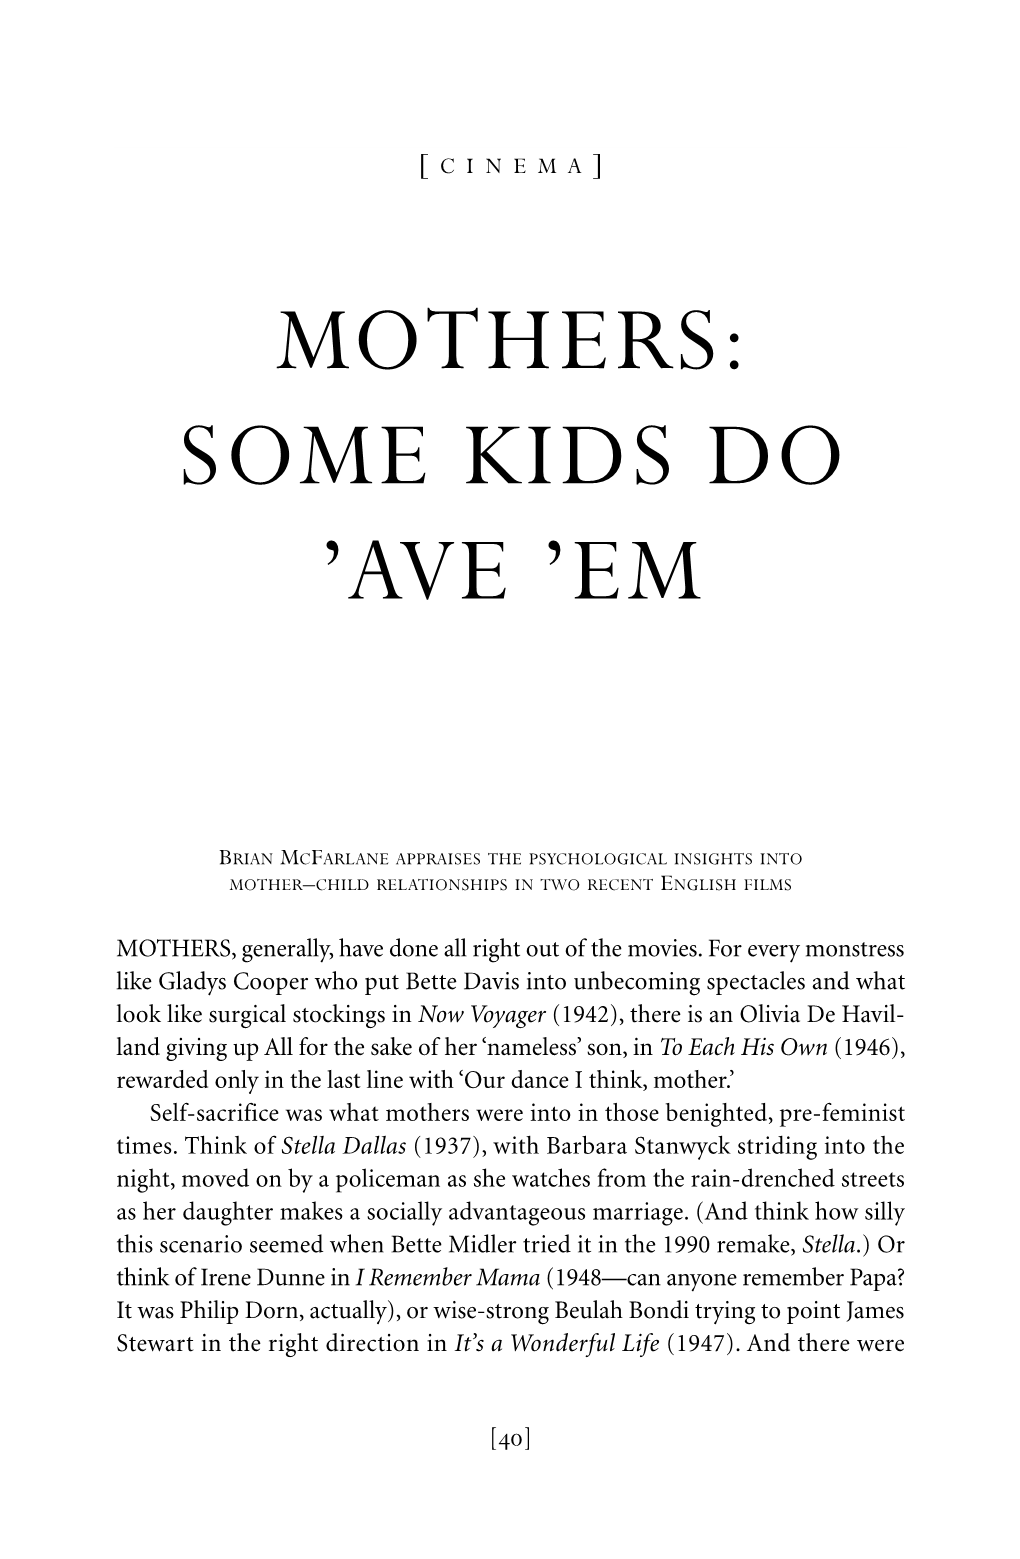 Mothers: Some Kids Do ’Ave ’Em